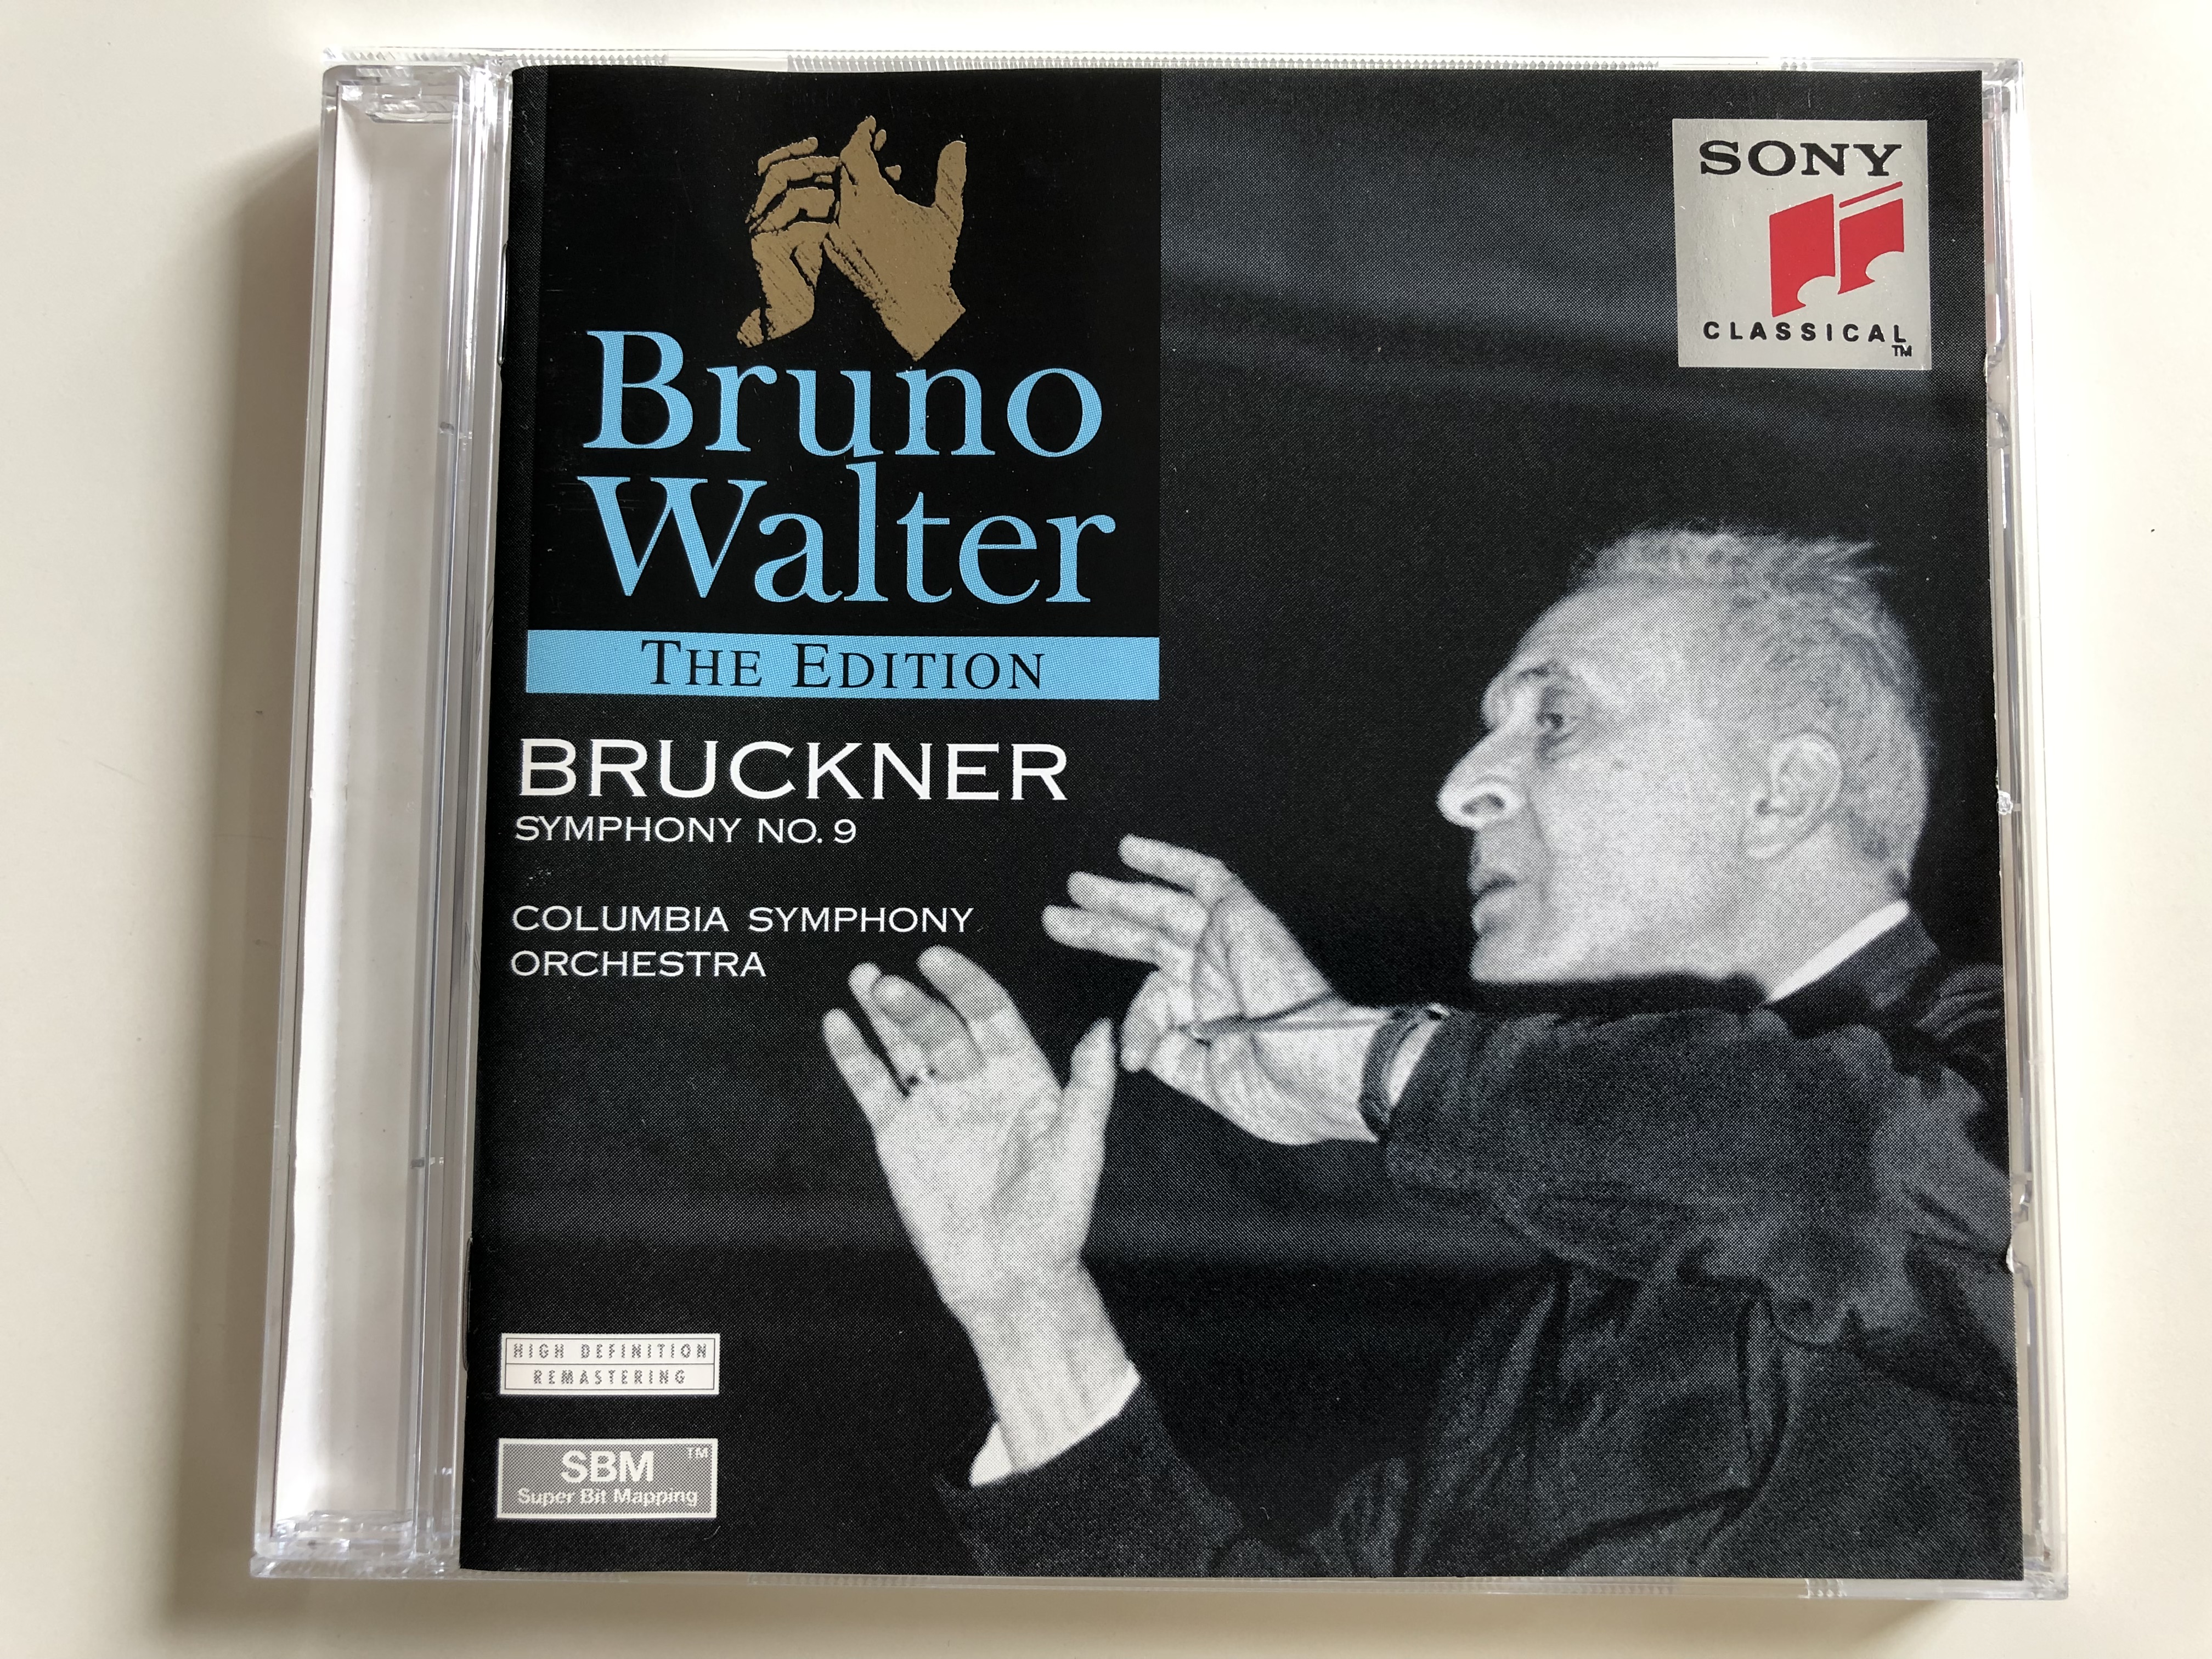 -bruno-walter-the-edition-bruckner-symphony-no.-9-columbia-symphony-orchestra-sony-classical-audio-cd-1996-smk-64-483-1-.jpg